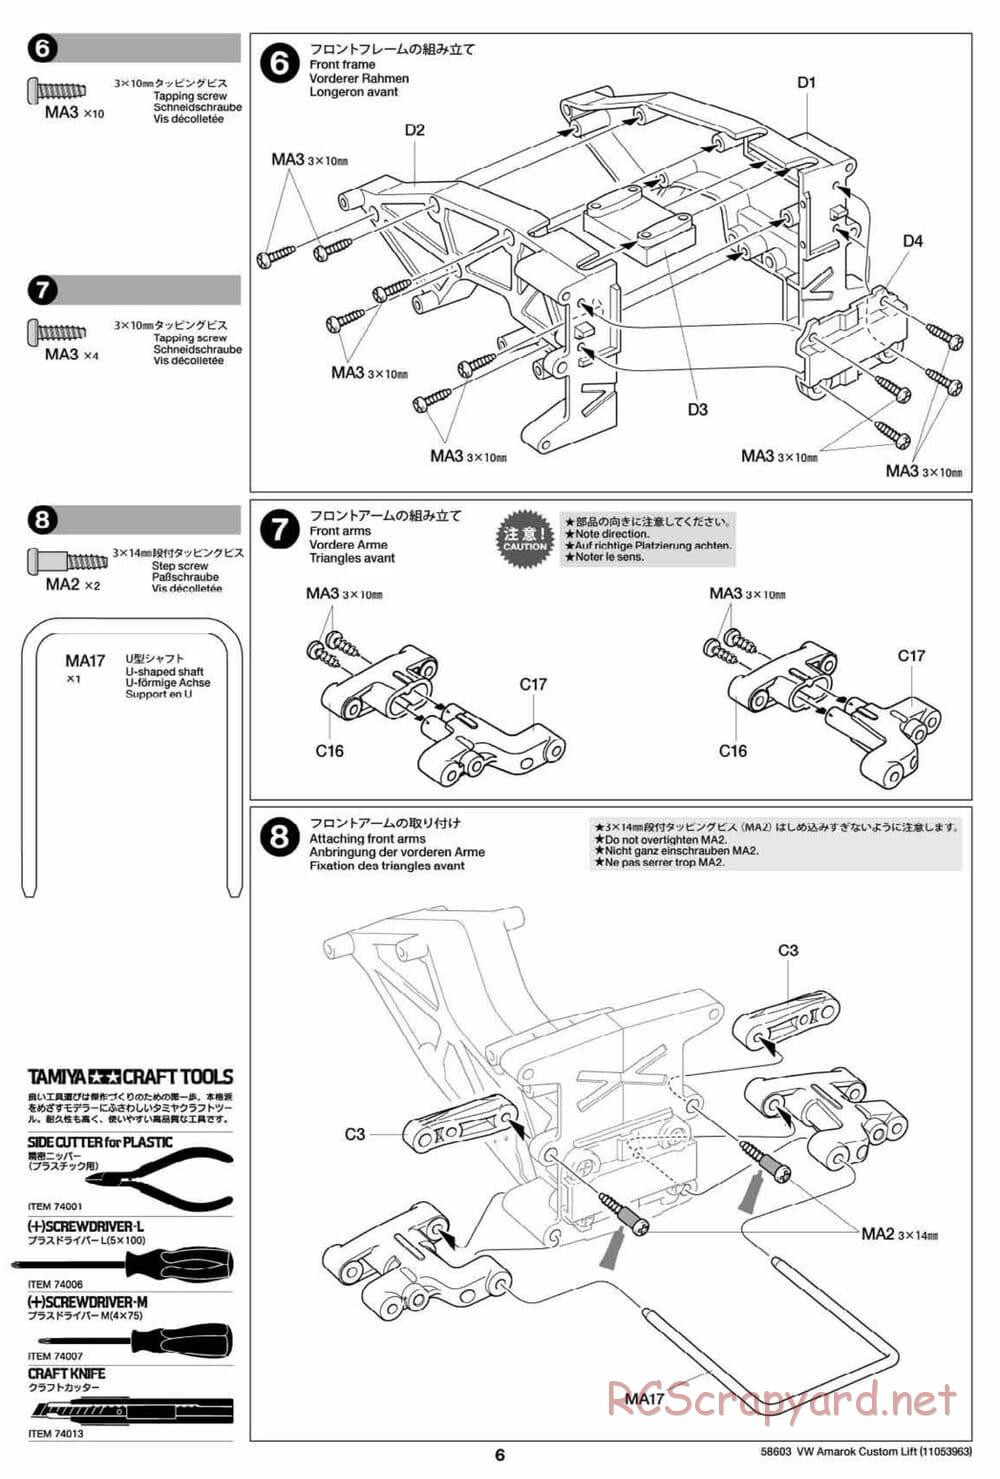 Tamiya - Volkswagen Amarok Custom Lift - WT-01N Chassis - Manual - Page 6